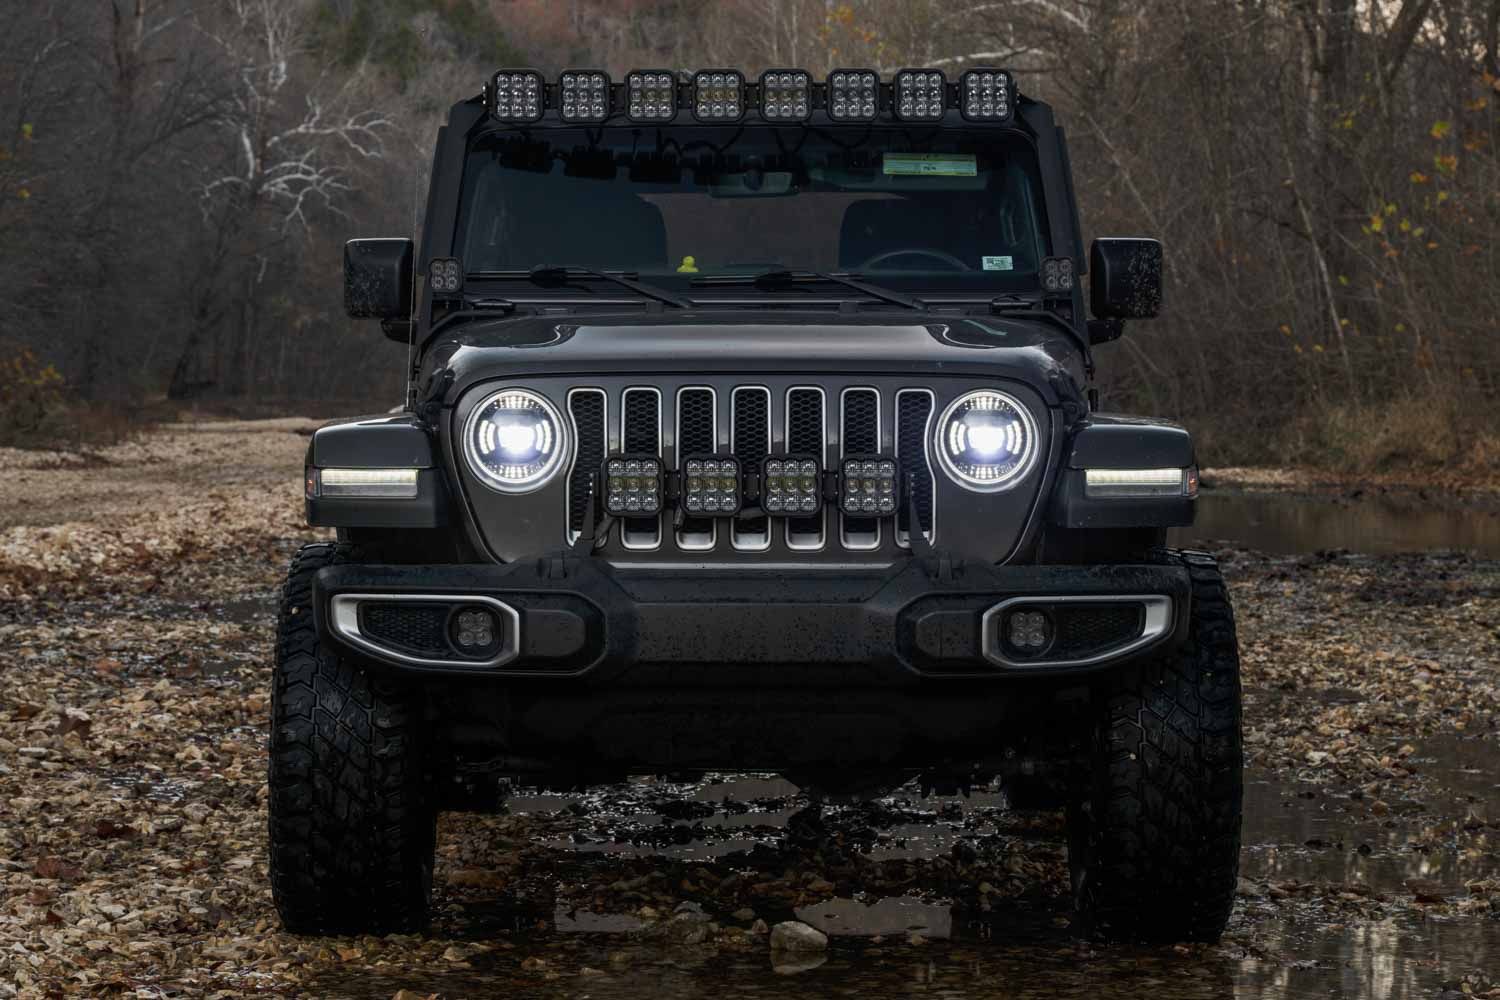 The Best Jeep Wrangler LED Headlights | Elite Series Headlights